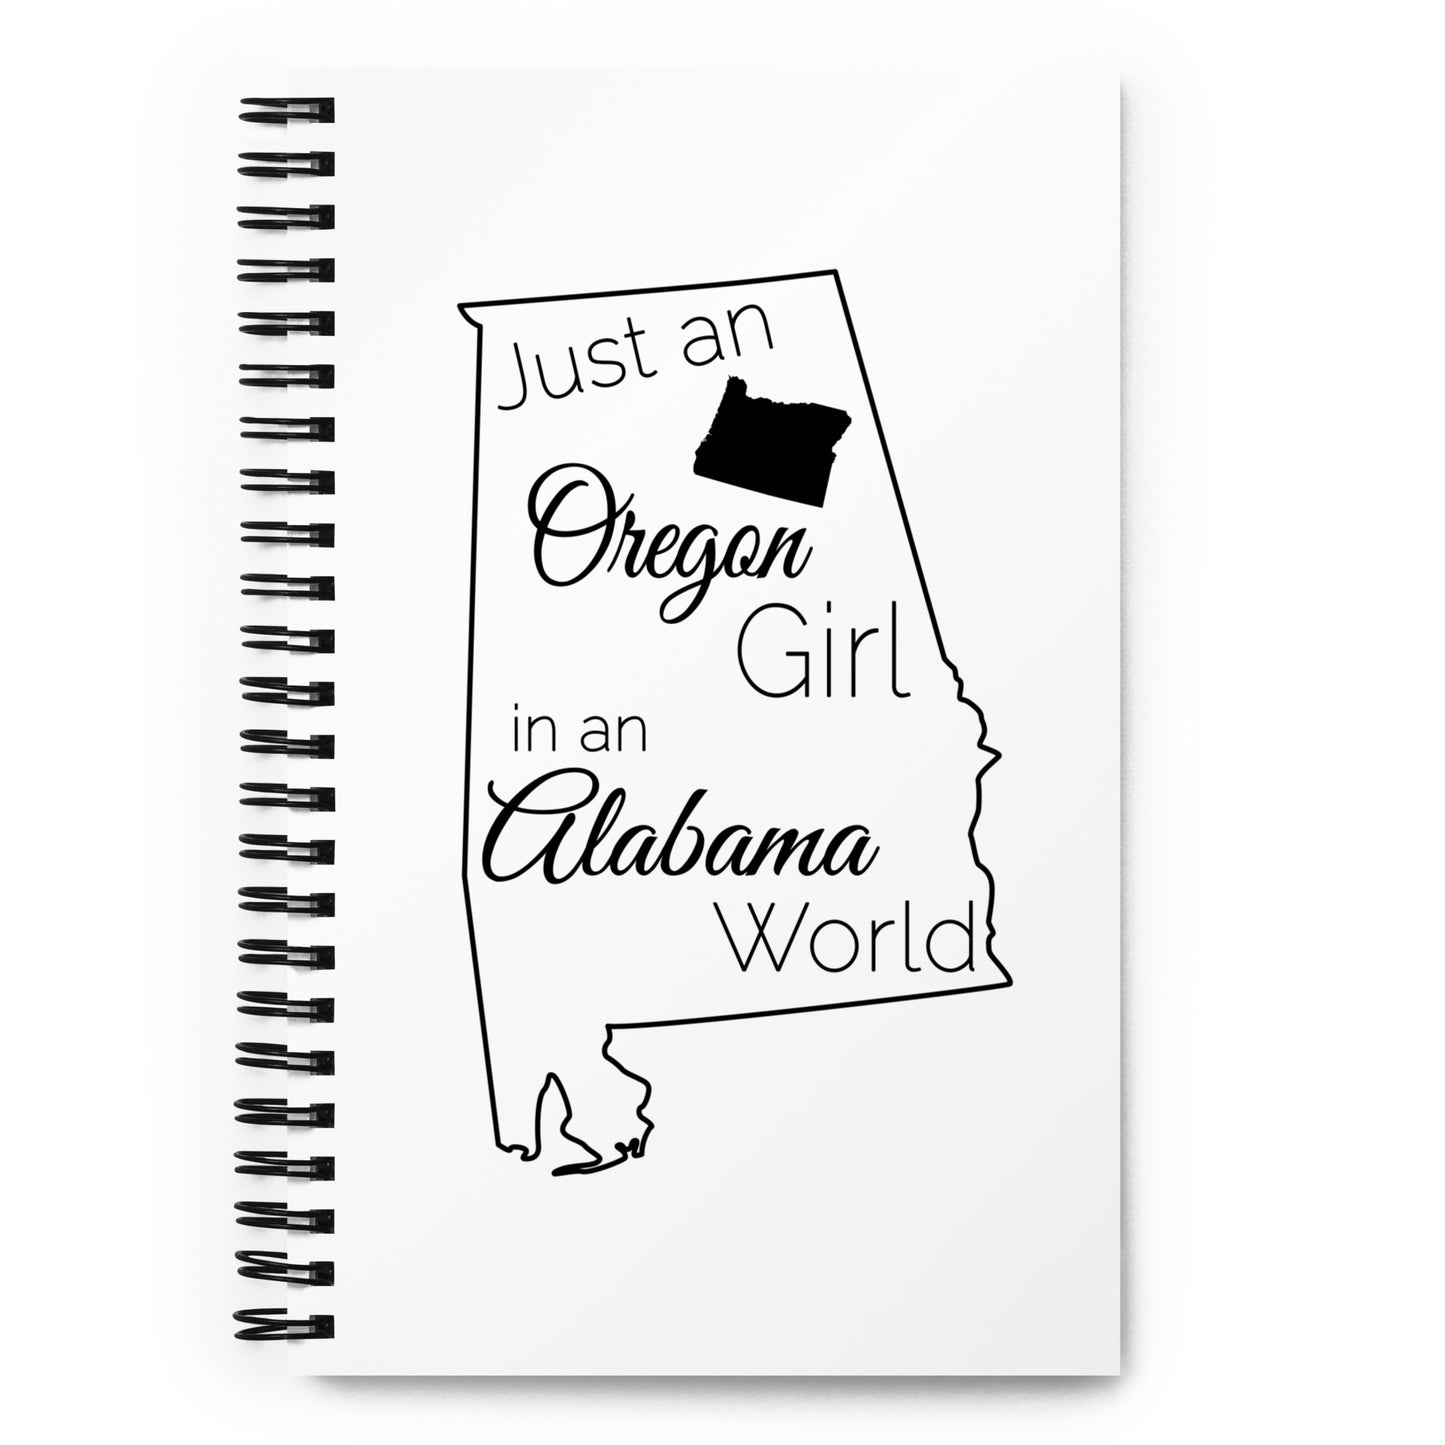 Just an Oregon Girl in an Alabama World Spiral notebook